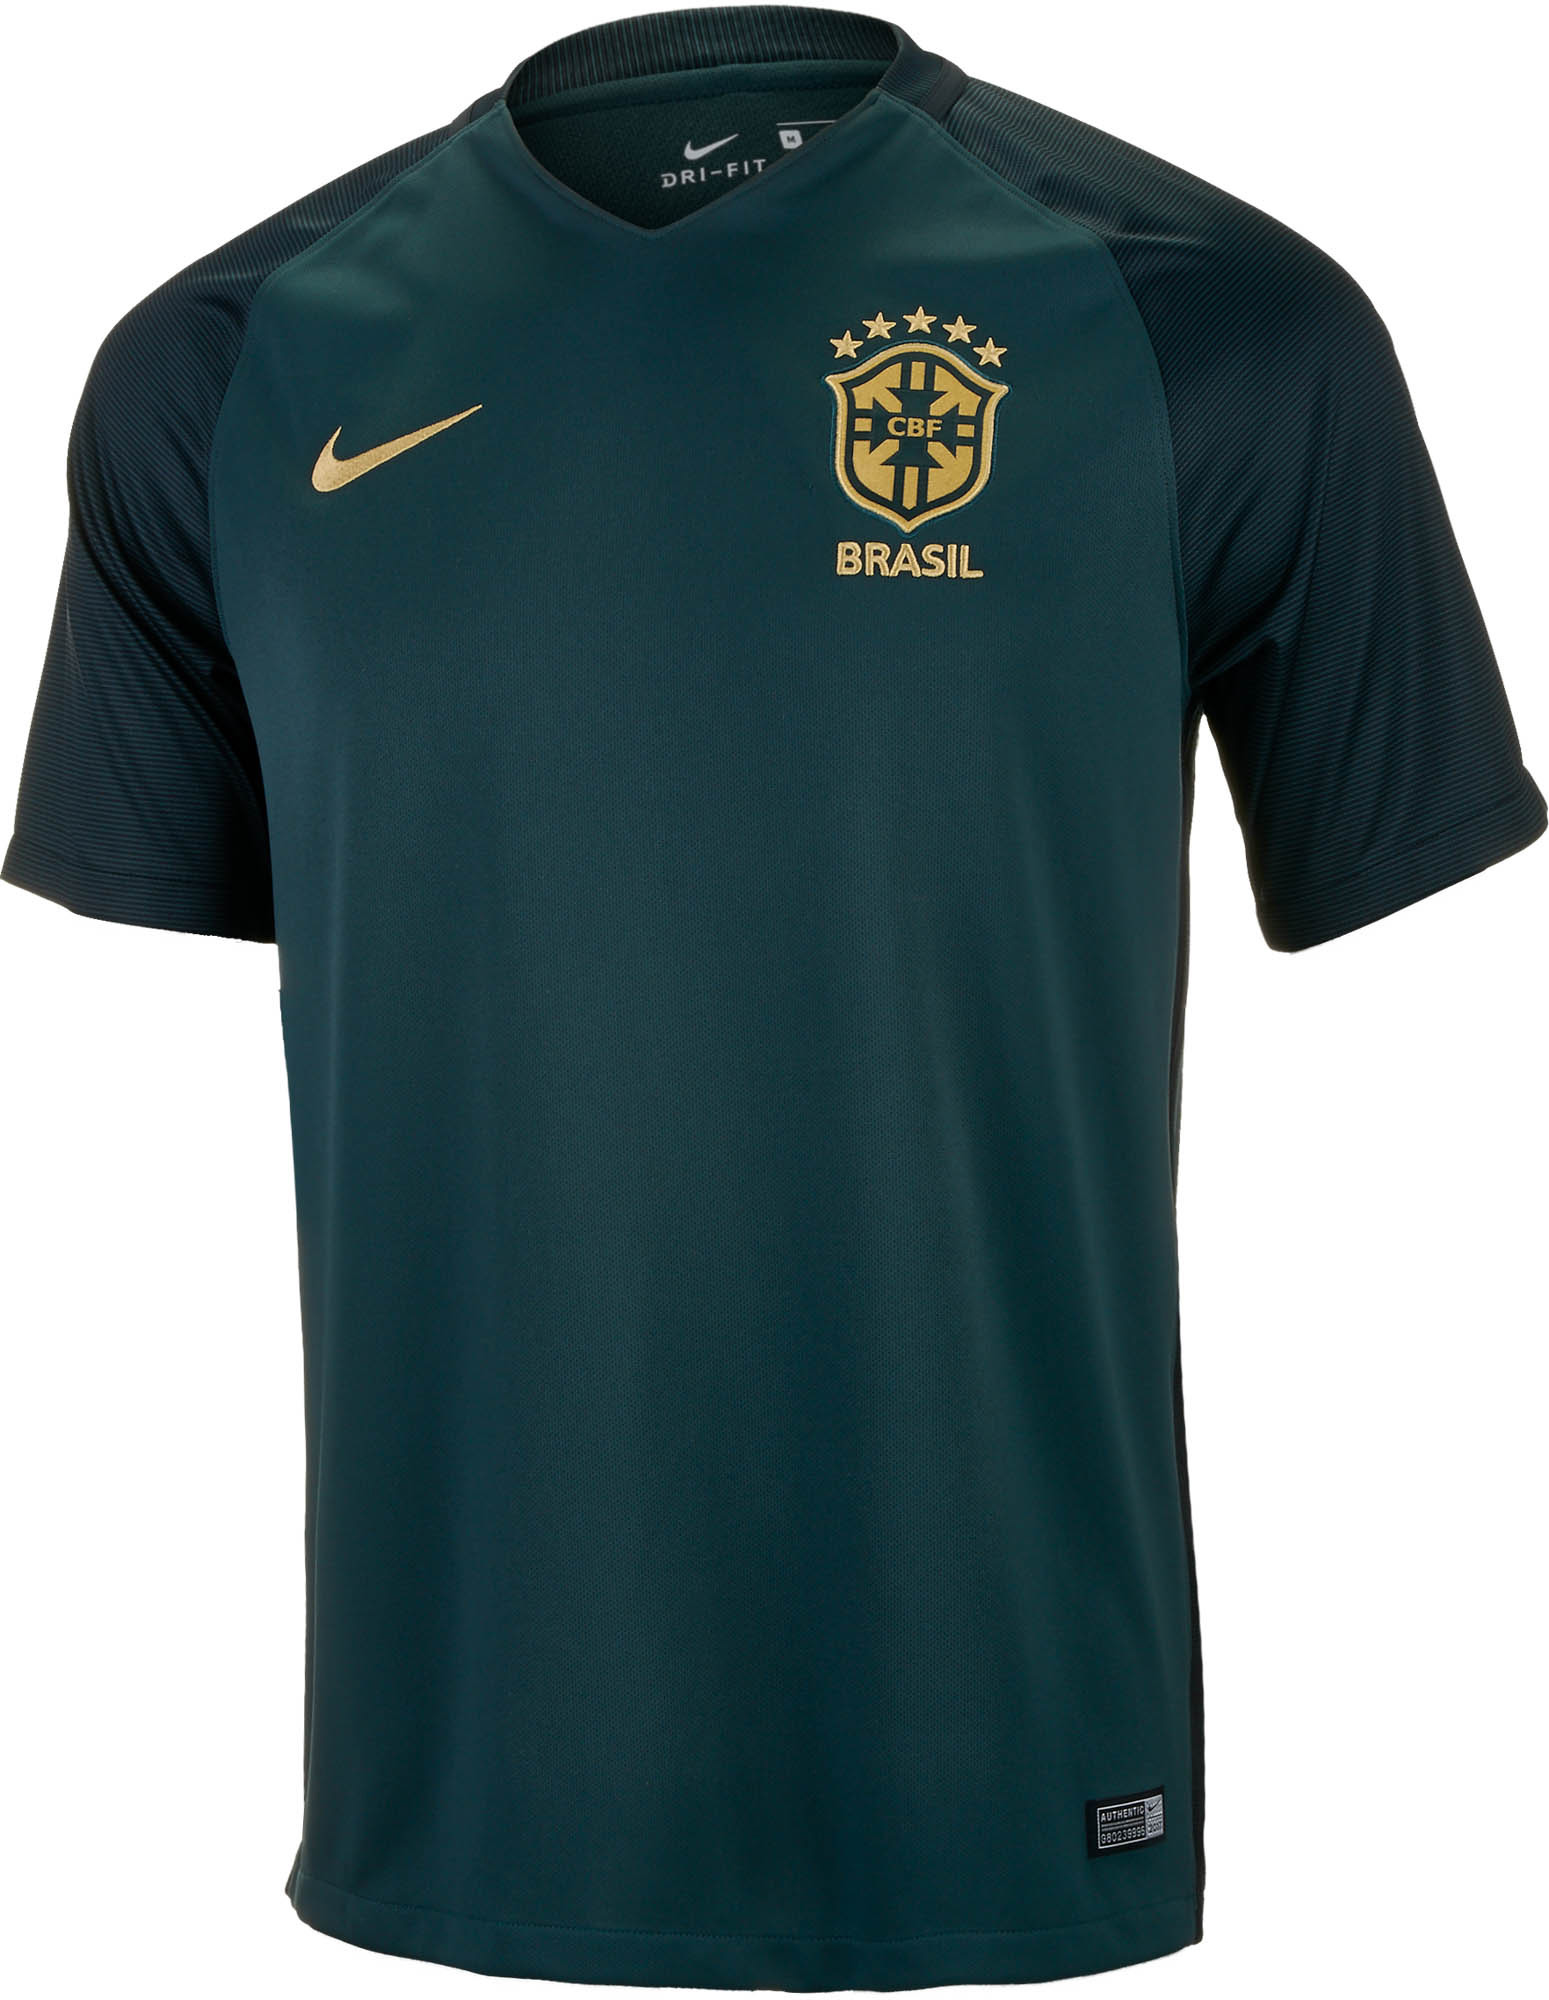 official brazil soccer jersey